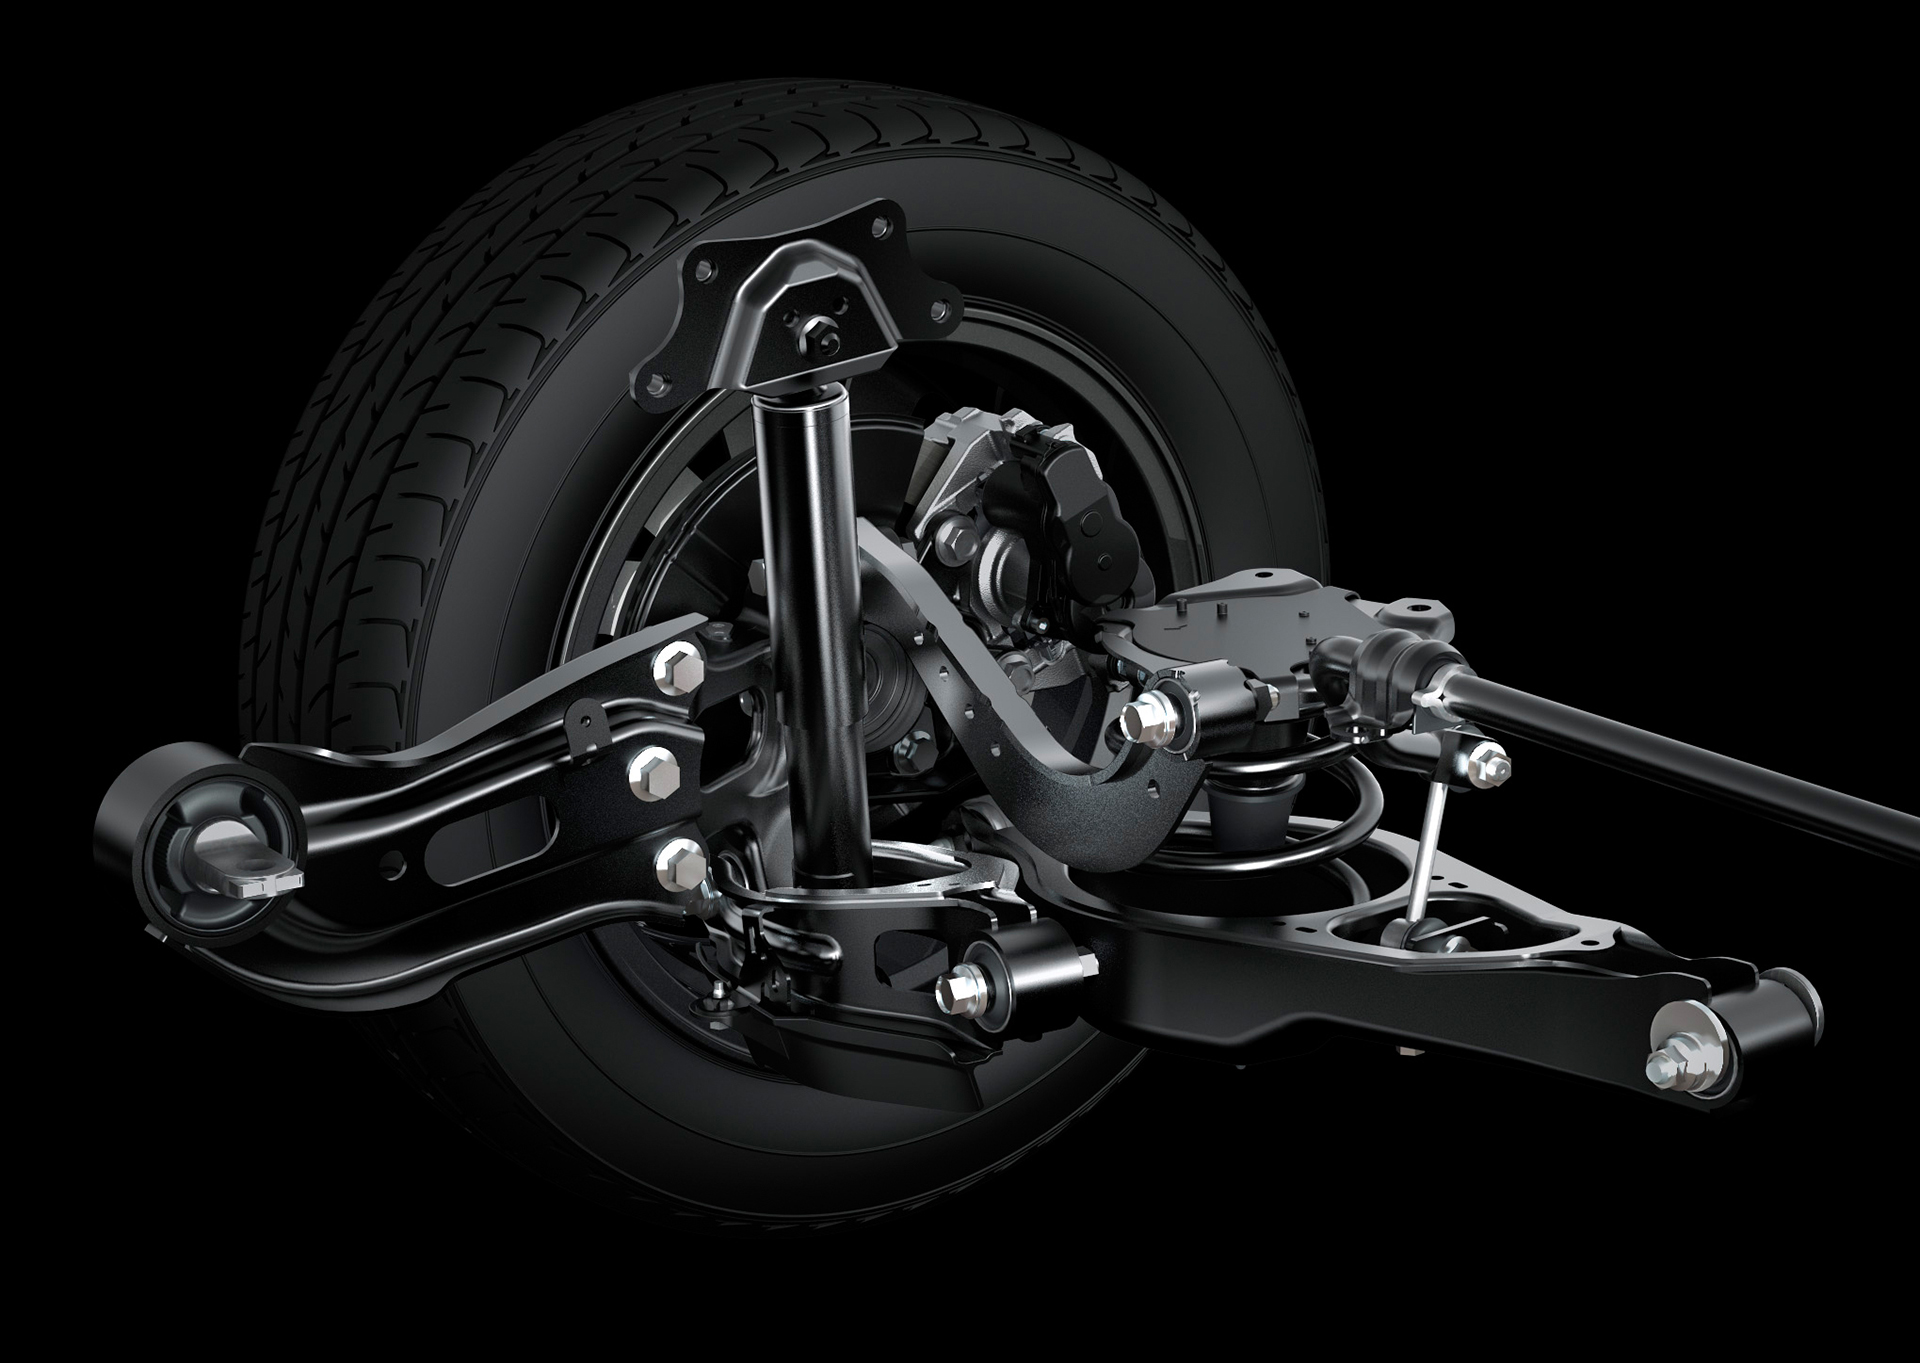 Vellfire double-wishbone rear suspension